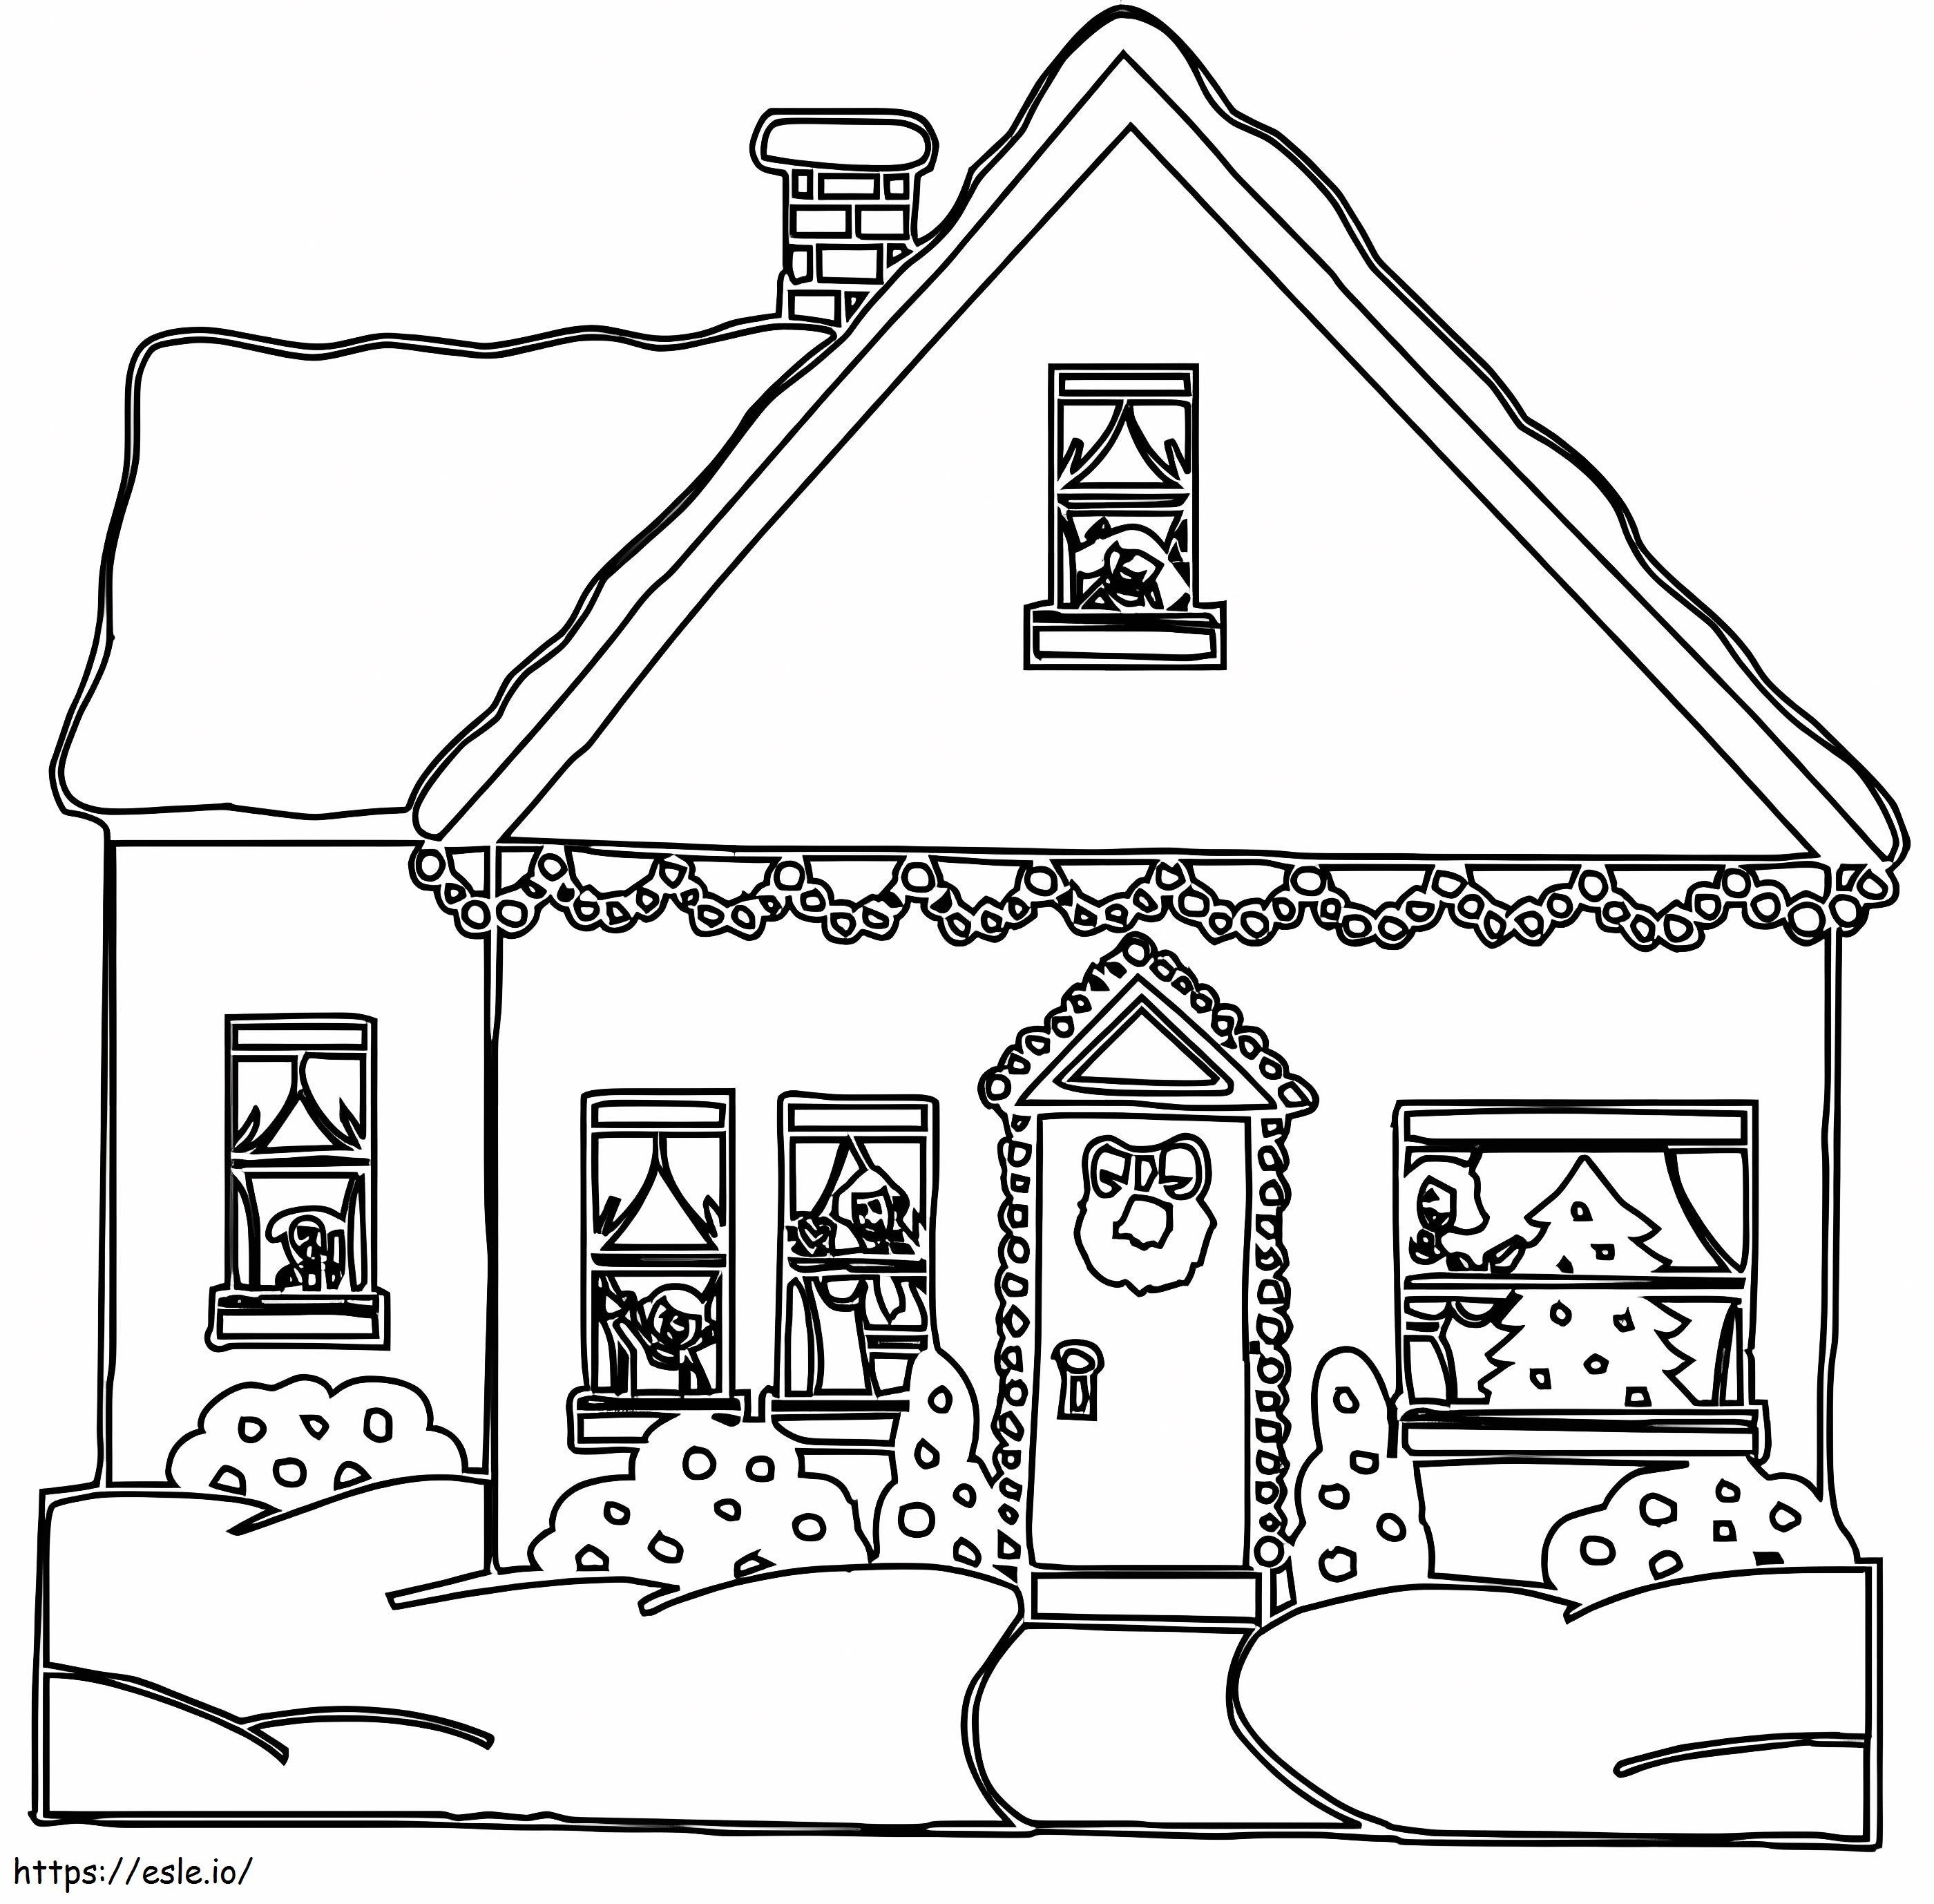 Winterhaus ausmalbilder